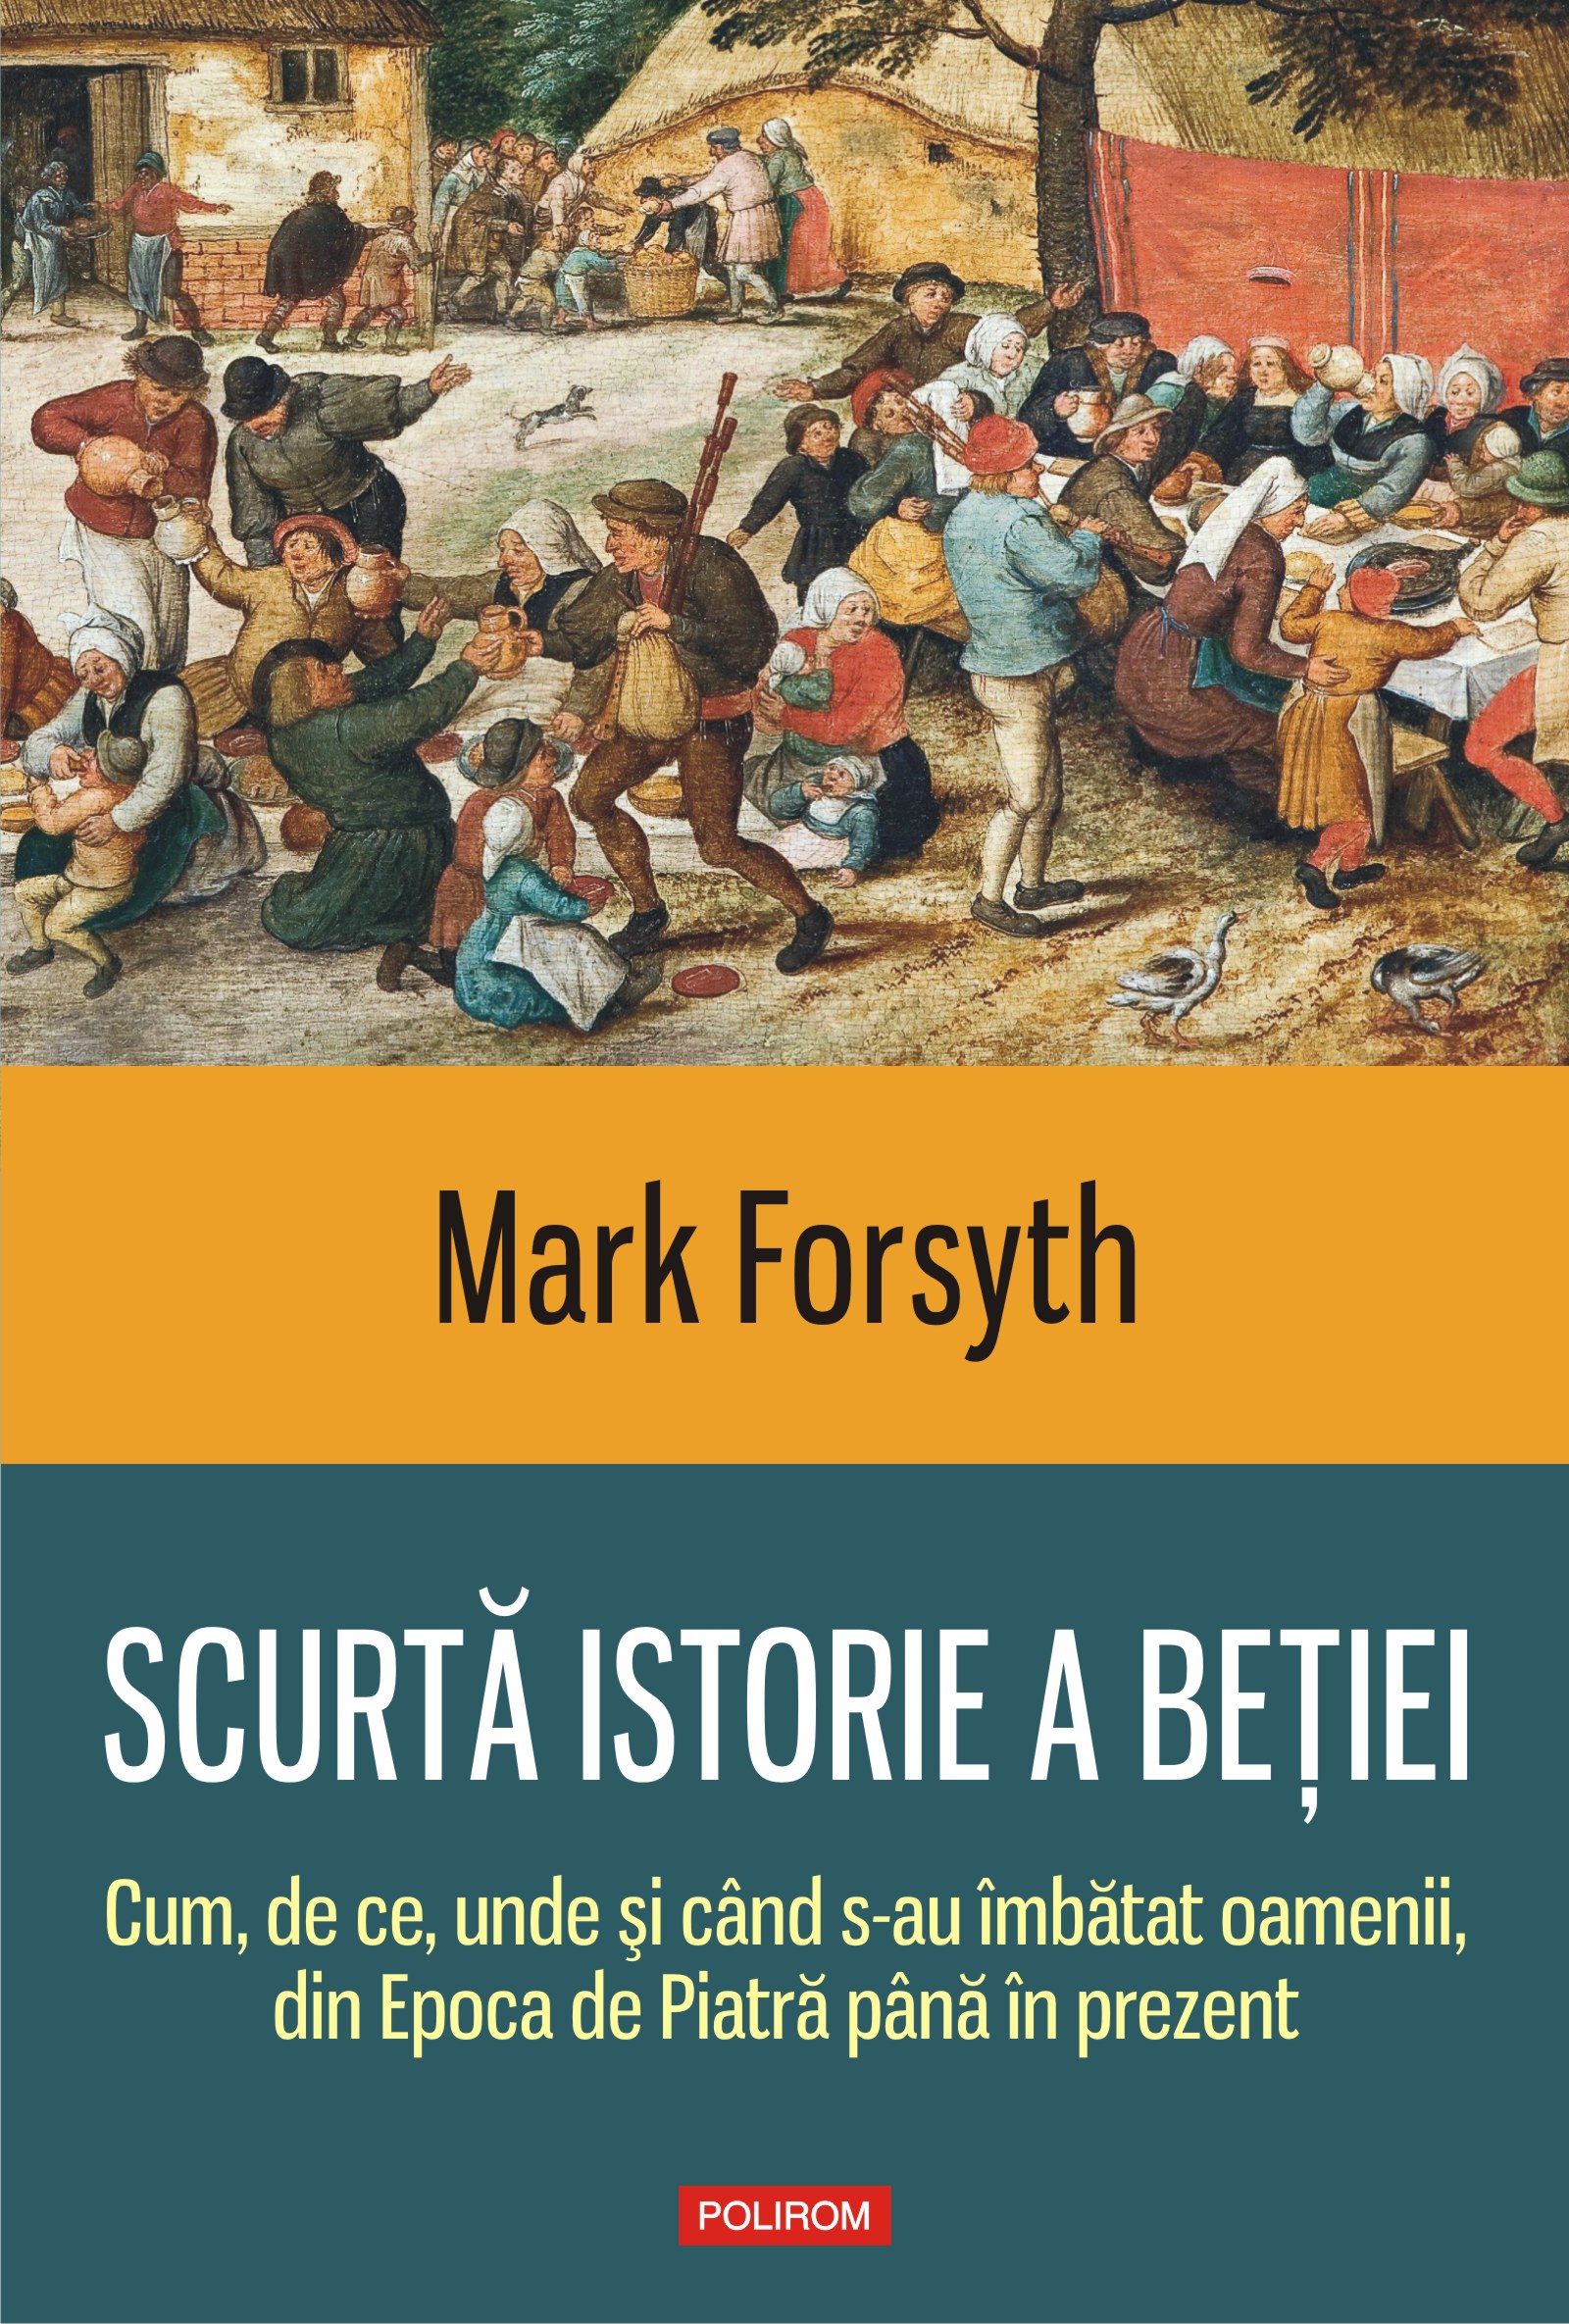 eBook Scurta istorie a betiei - Mark Forsyth